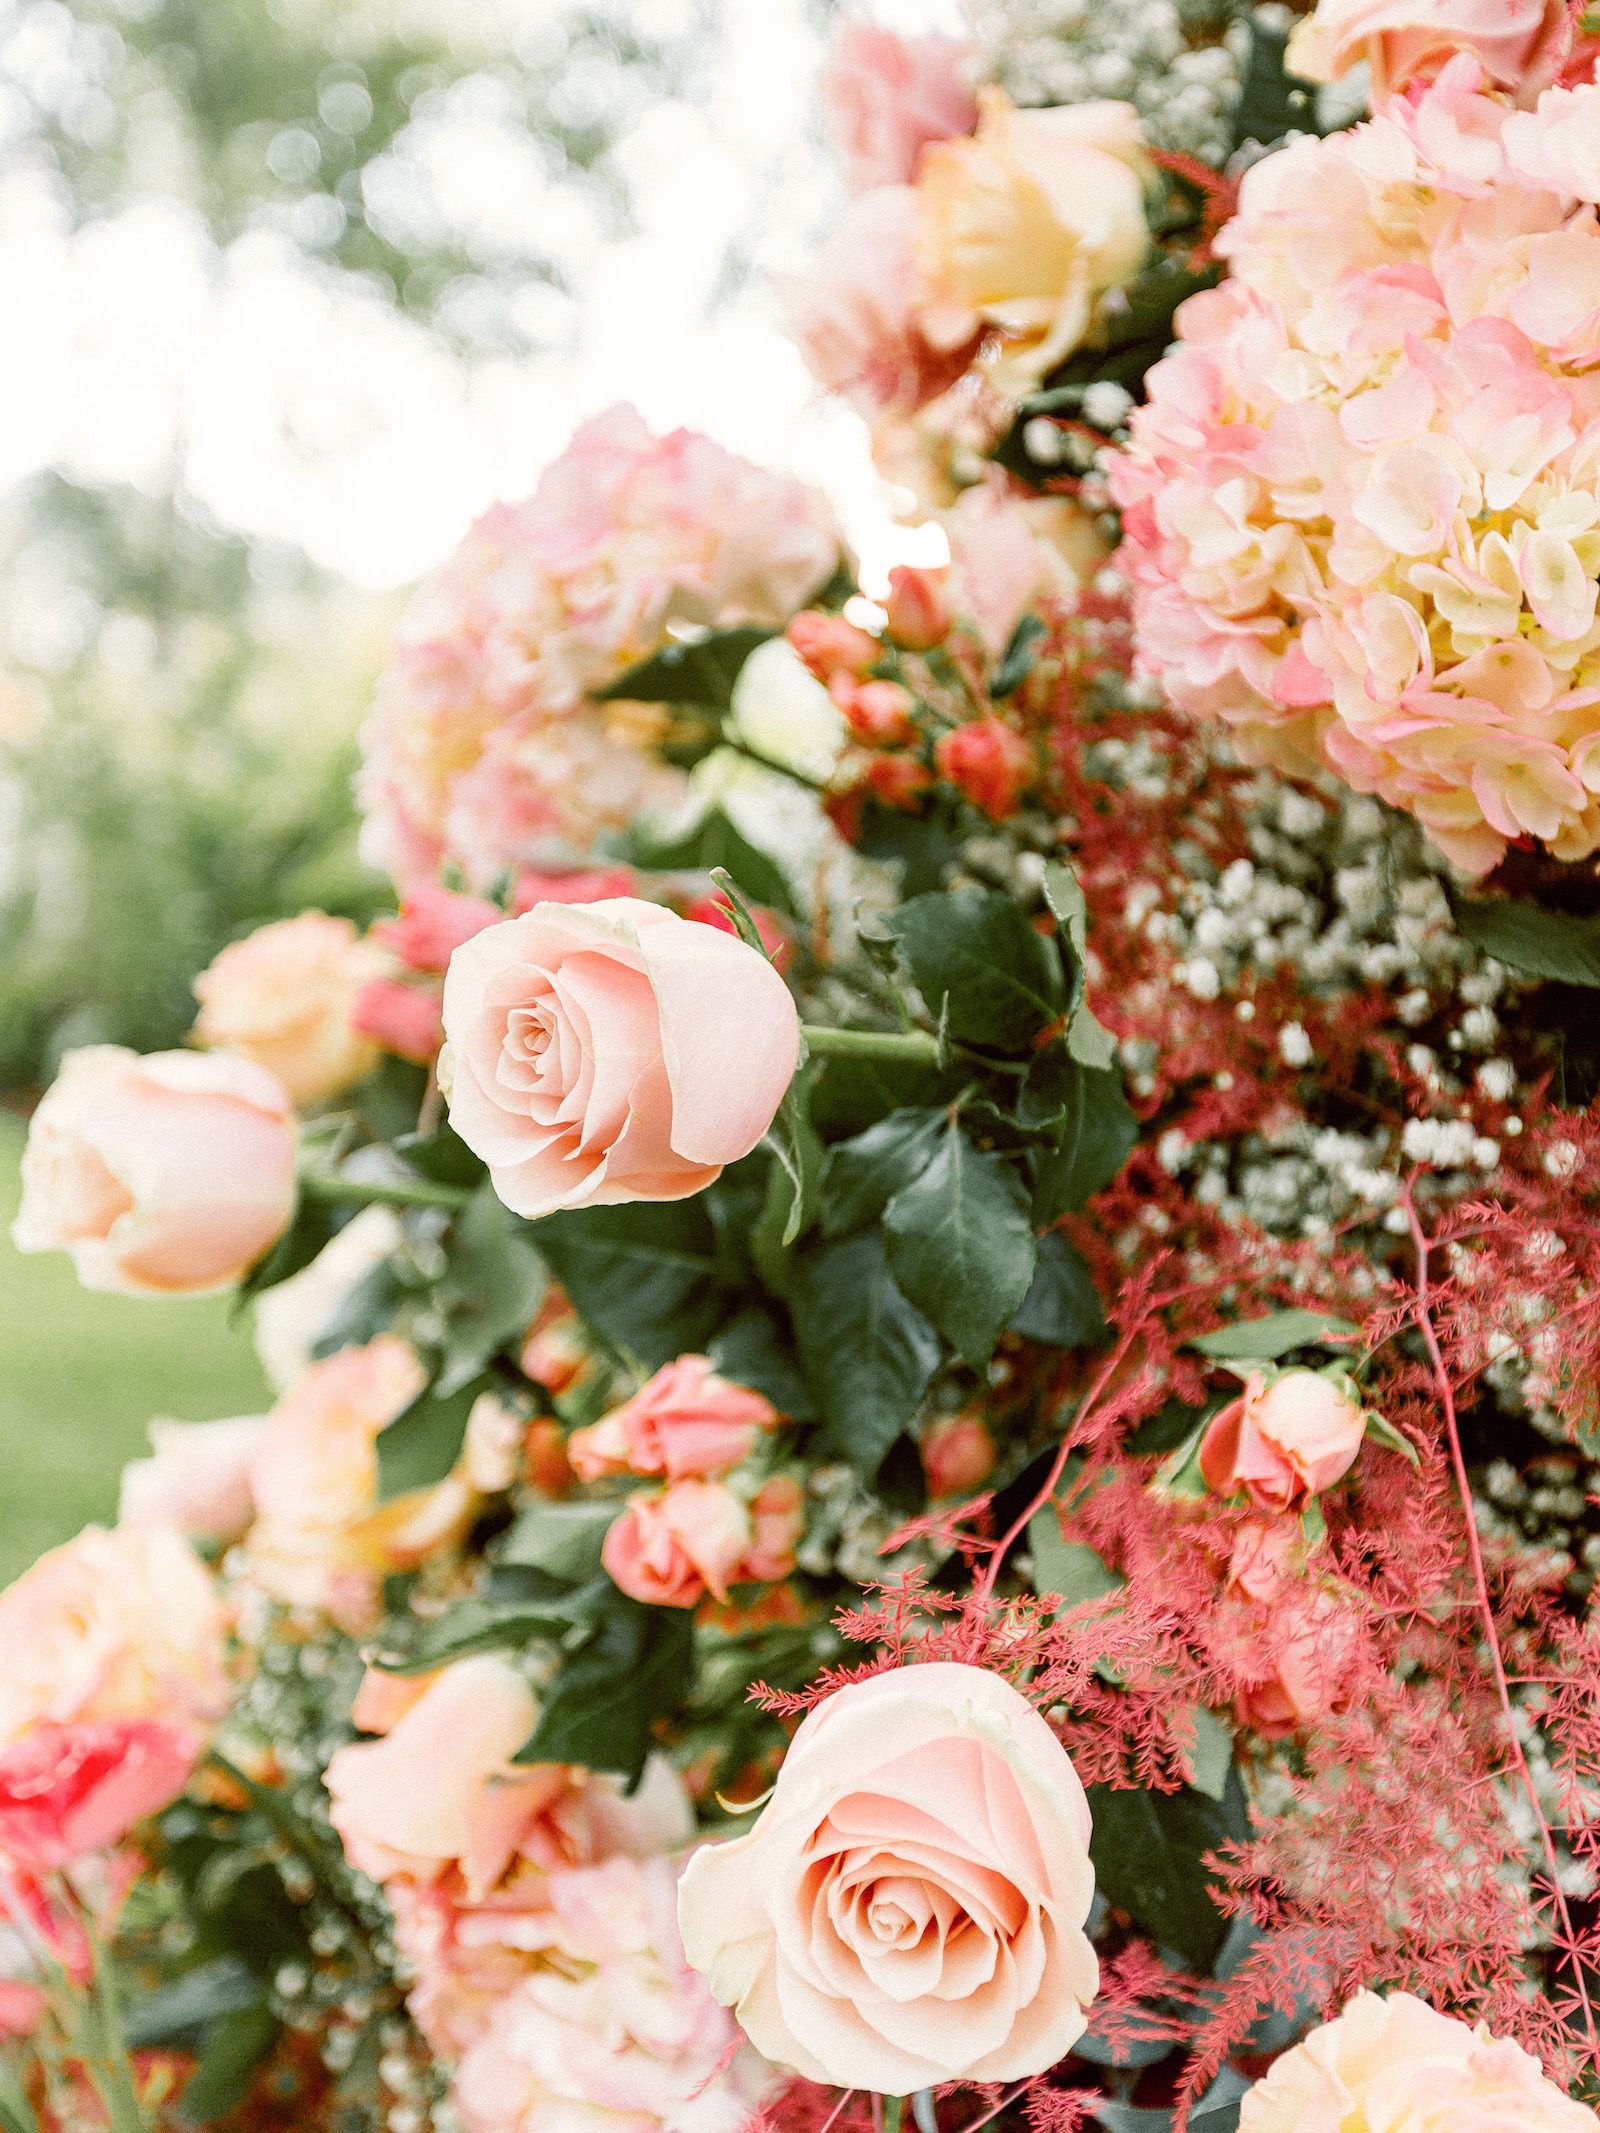 Fairytale Wedding Decor, Pink Roses and Hydrangeas Lush Altar Flowers. Tampa Bay Wedding Photographer Dewitt for Love. Wedding Florist Lemon Drops Me Tampa Bay. Most Trusted Wedding